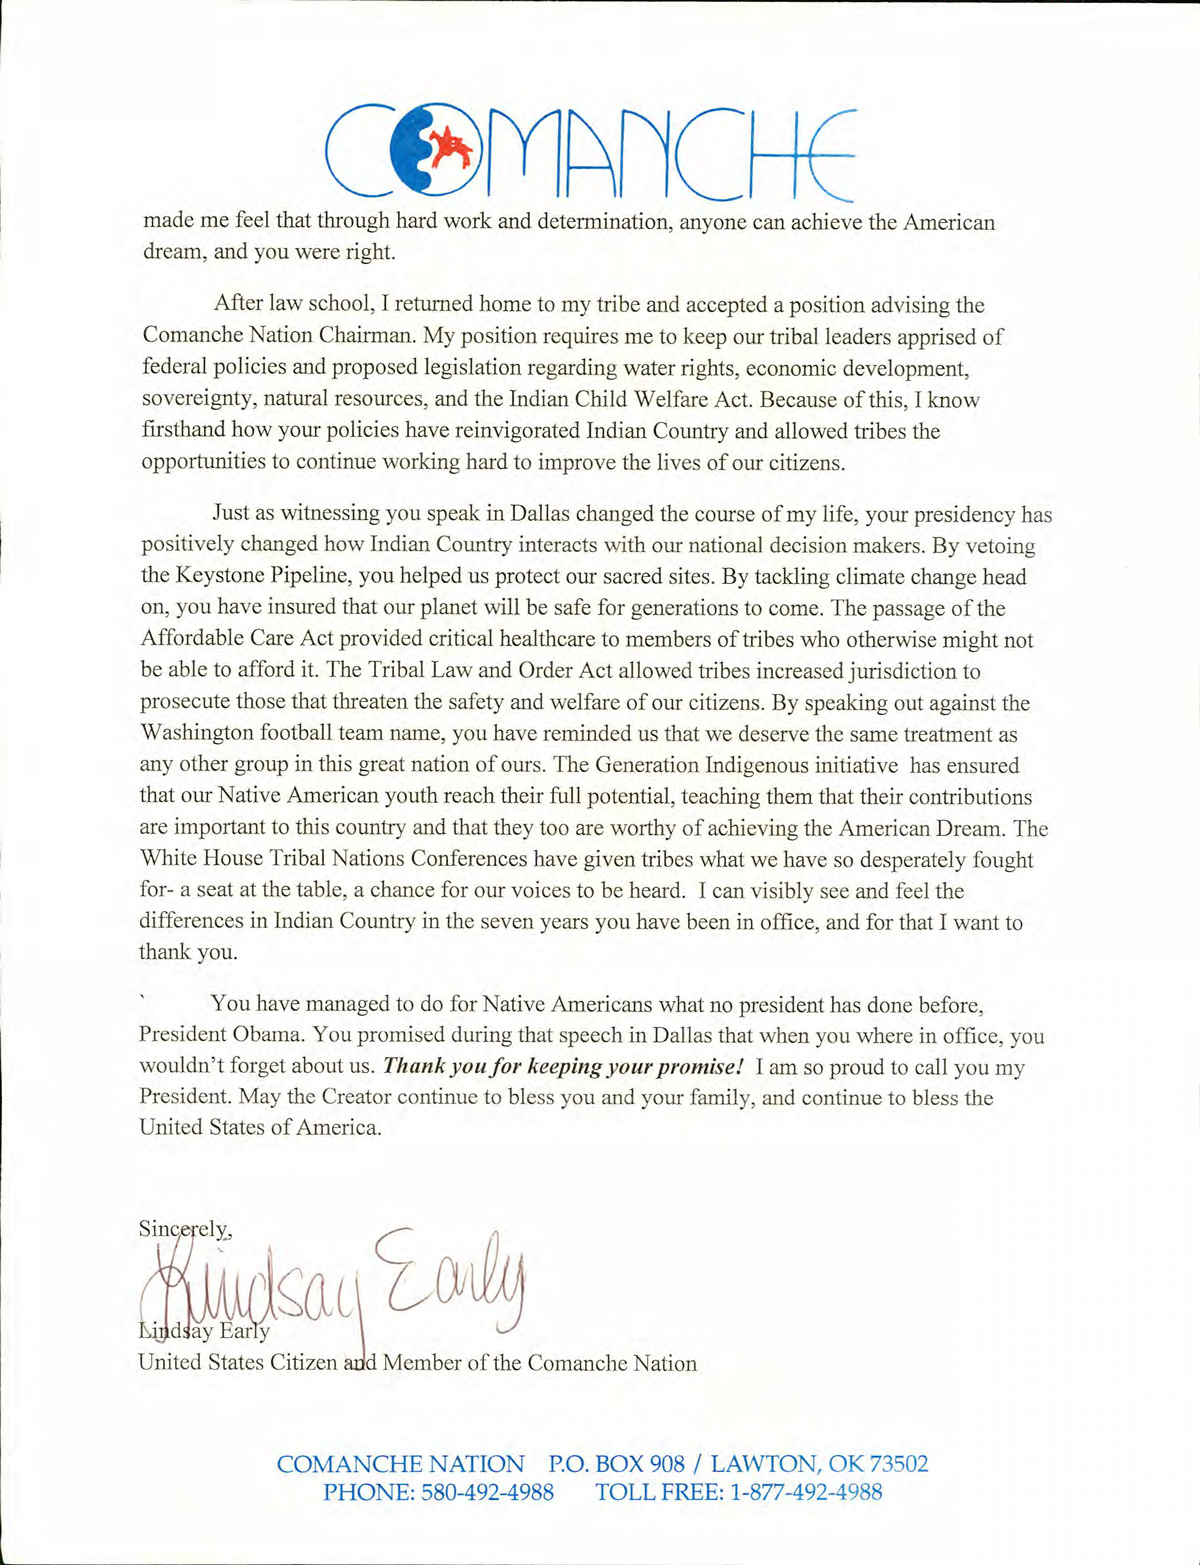 Lindsay's letter to President Obama